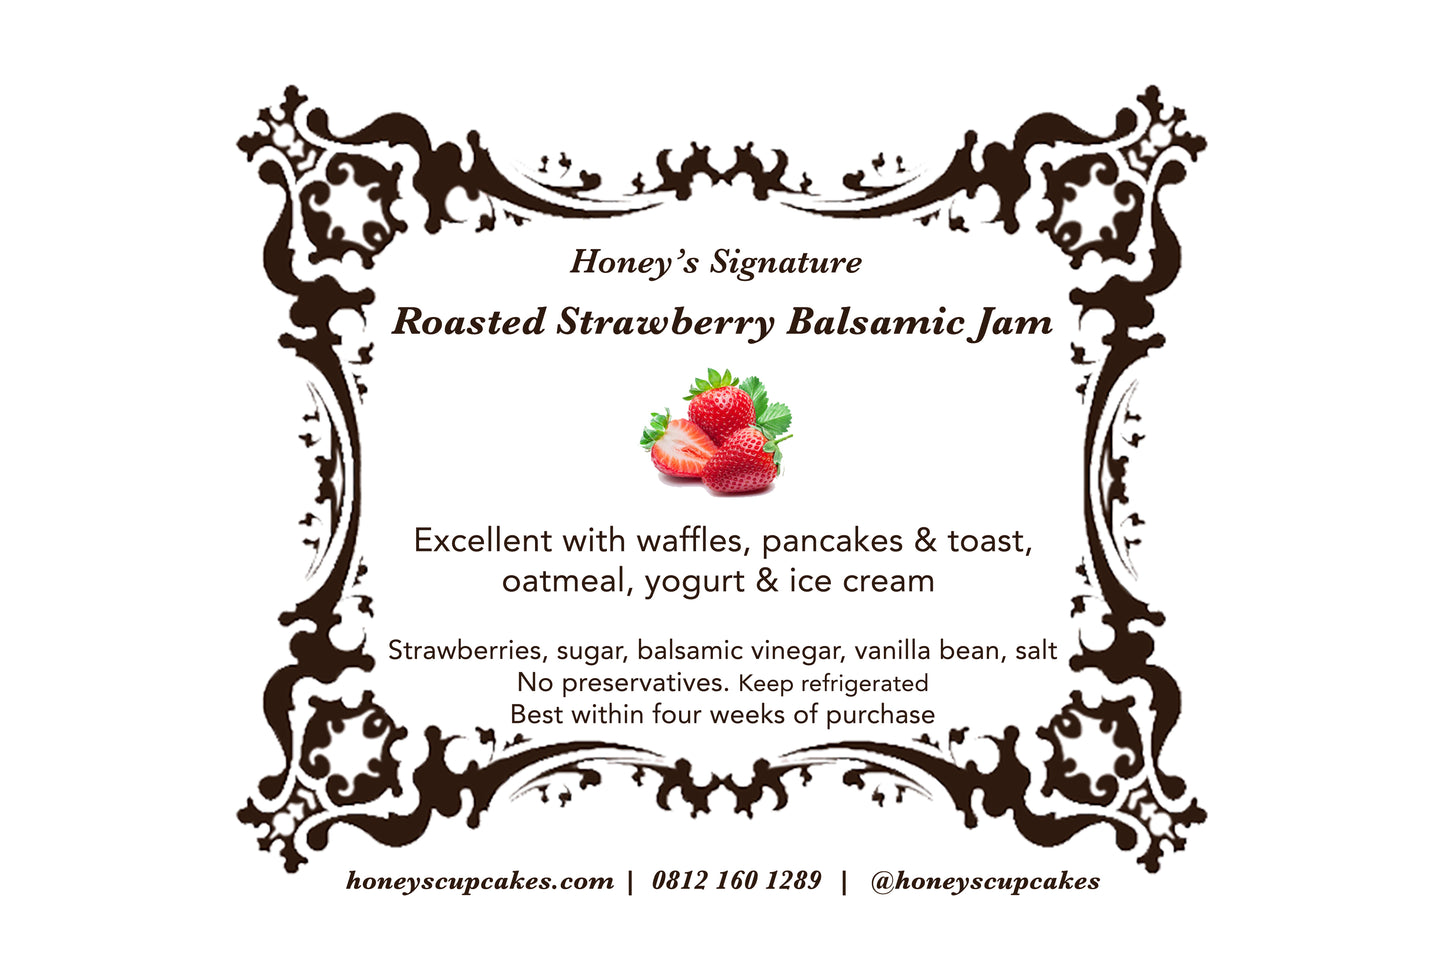 Honey’s Signature Roasted Strawberry Balsamic Jam